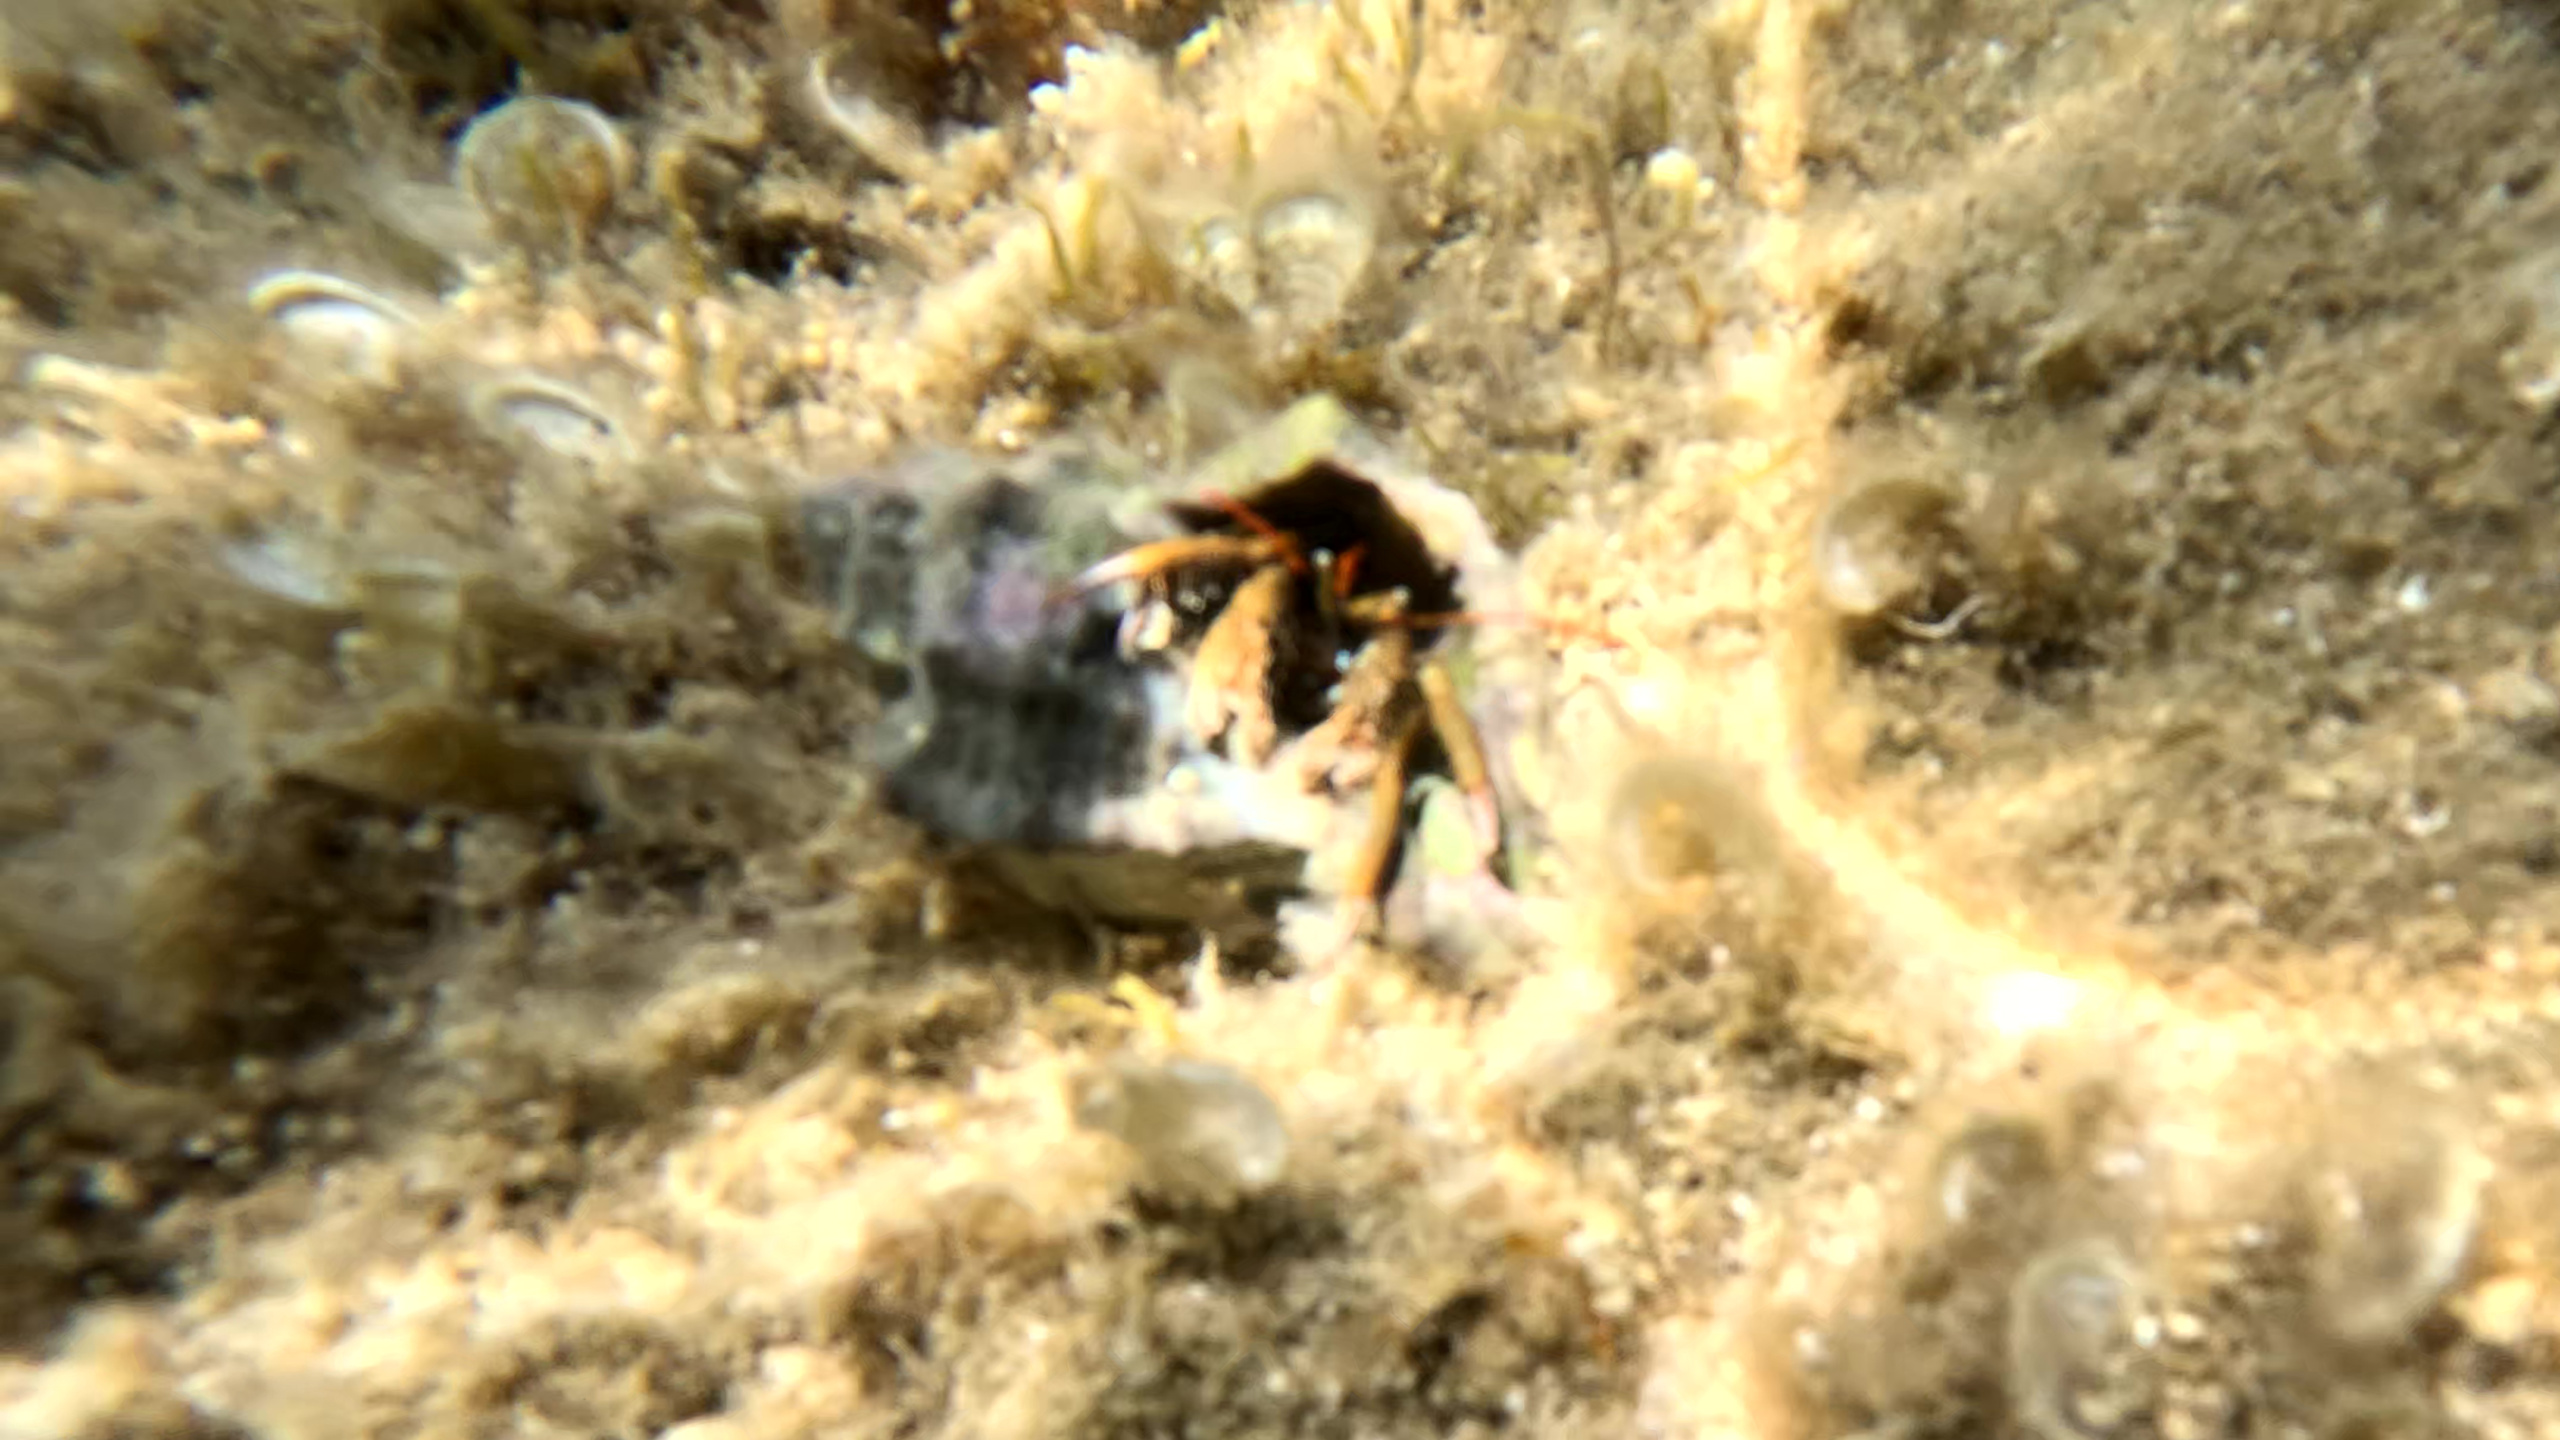 Murex trunculus or Hermit crab? Murice o Paguro? www.intotheblue.it